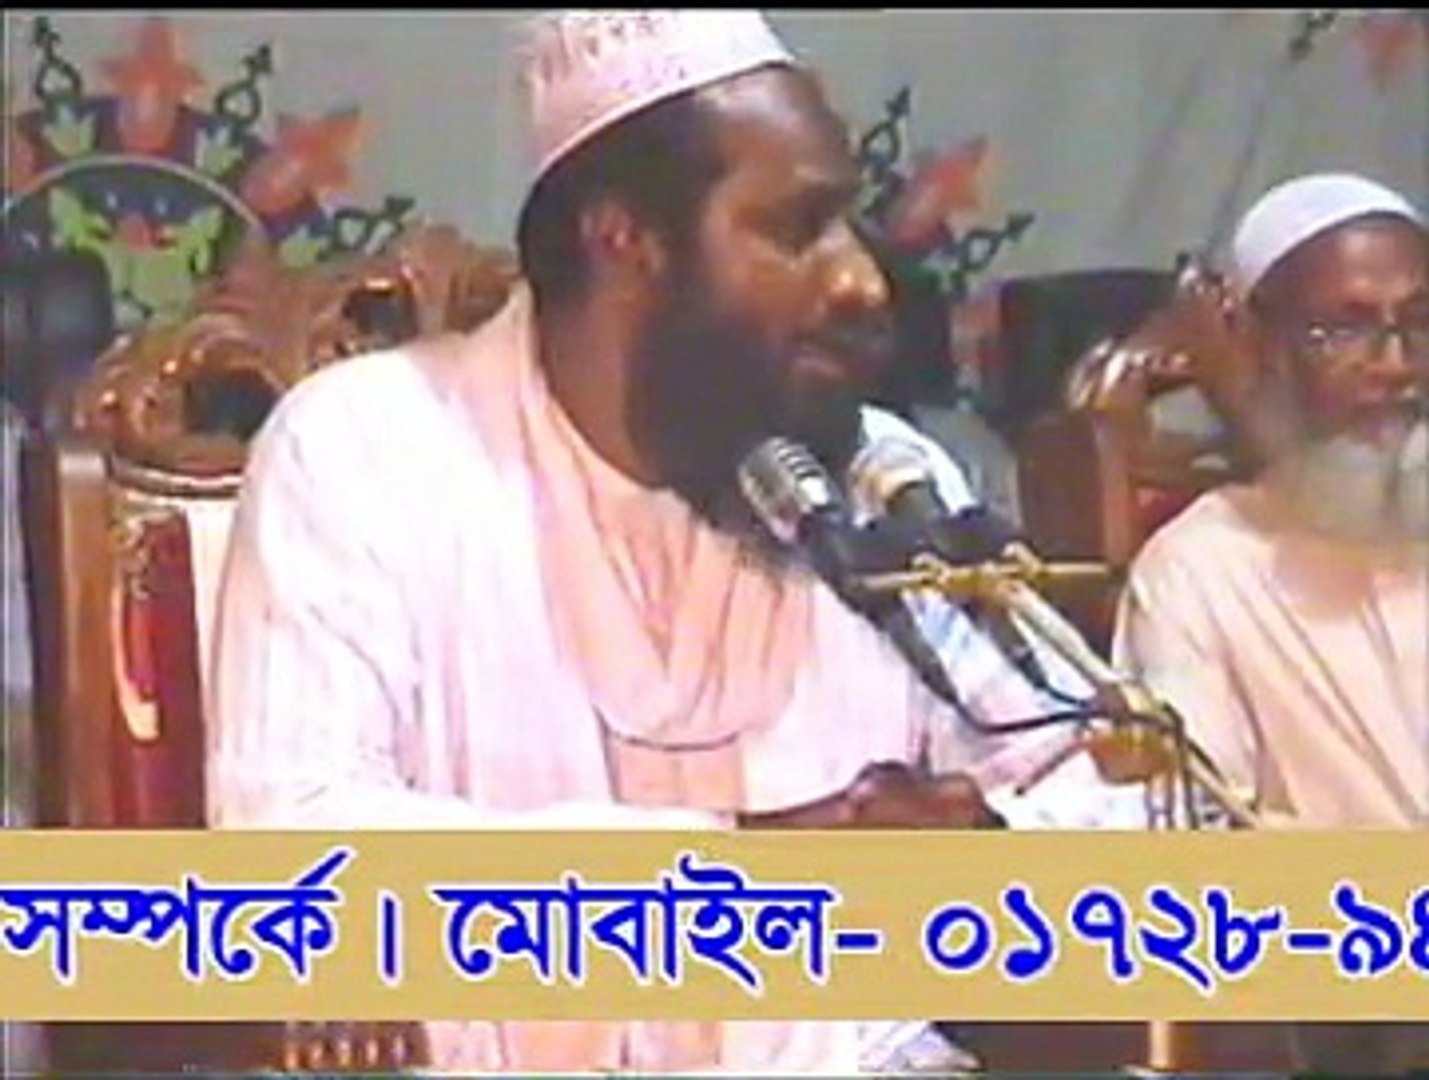 bangla waz full 2016 on DailyMotion.Com by Maulana Bazlur Rashid - video  Dailymotion